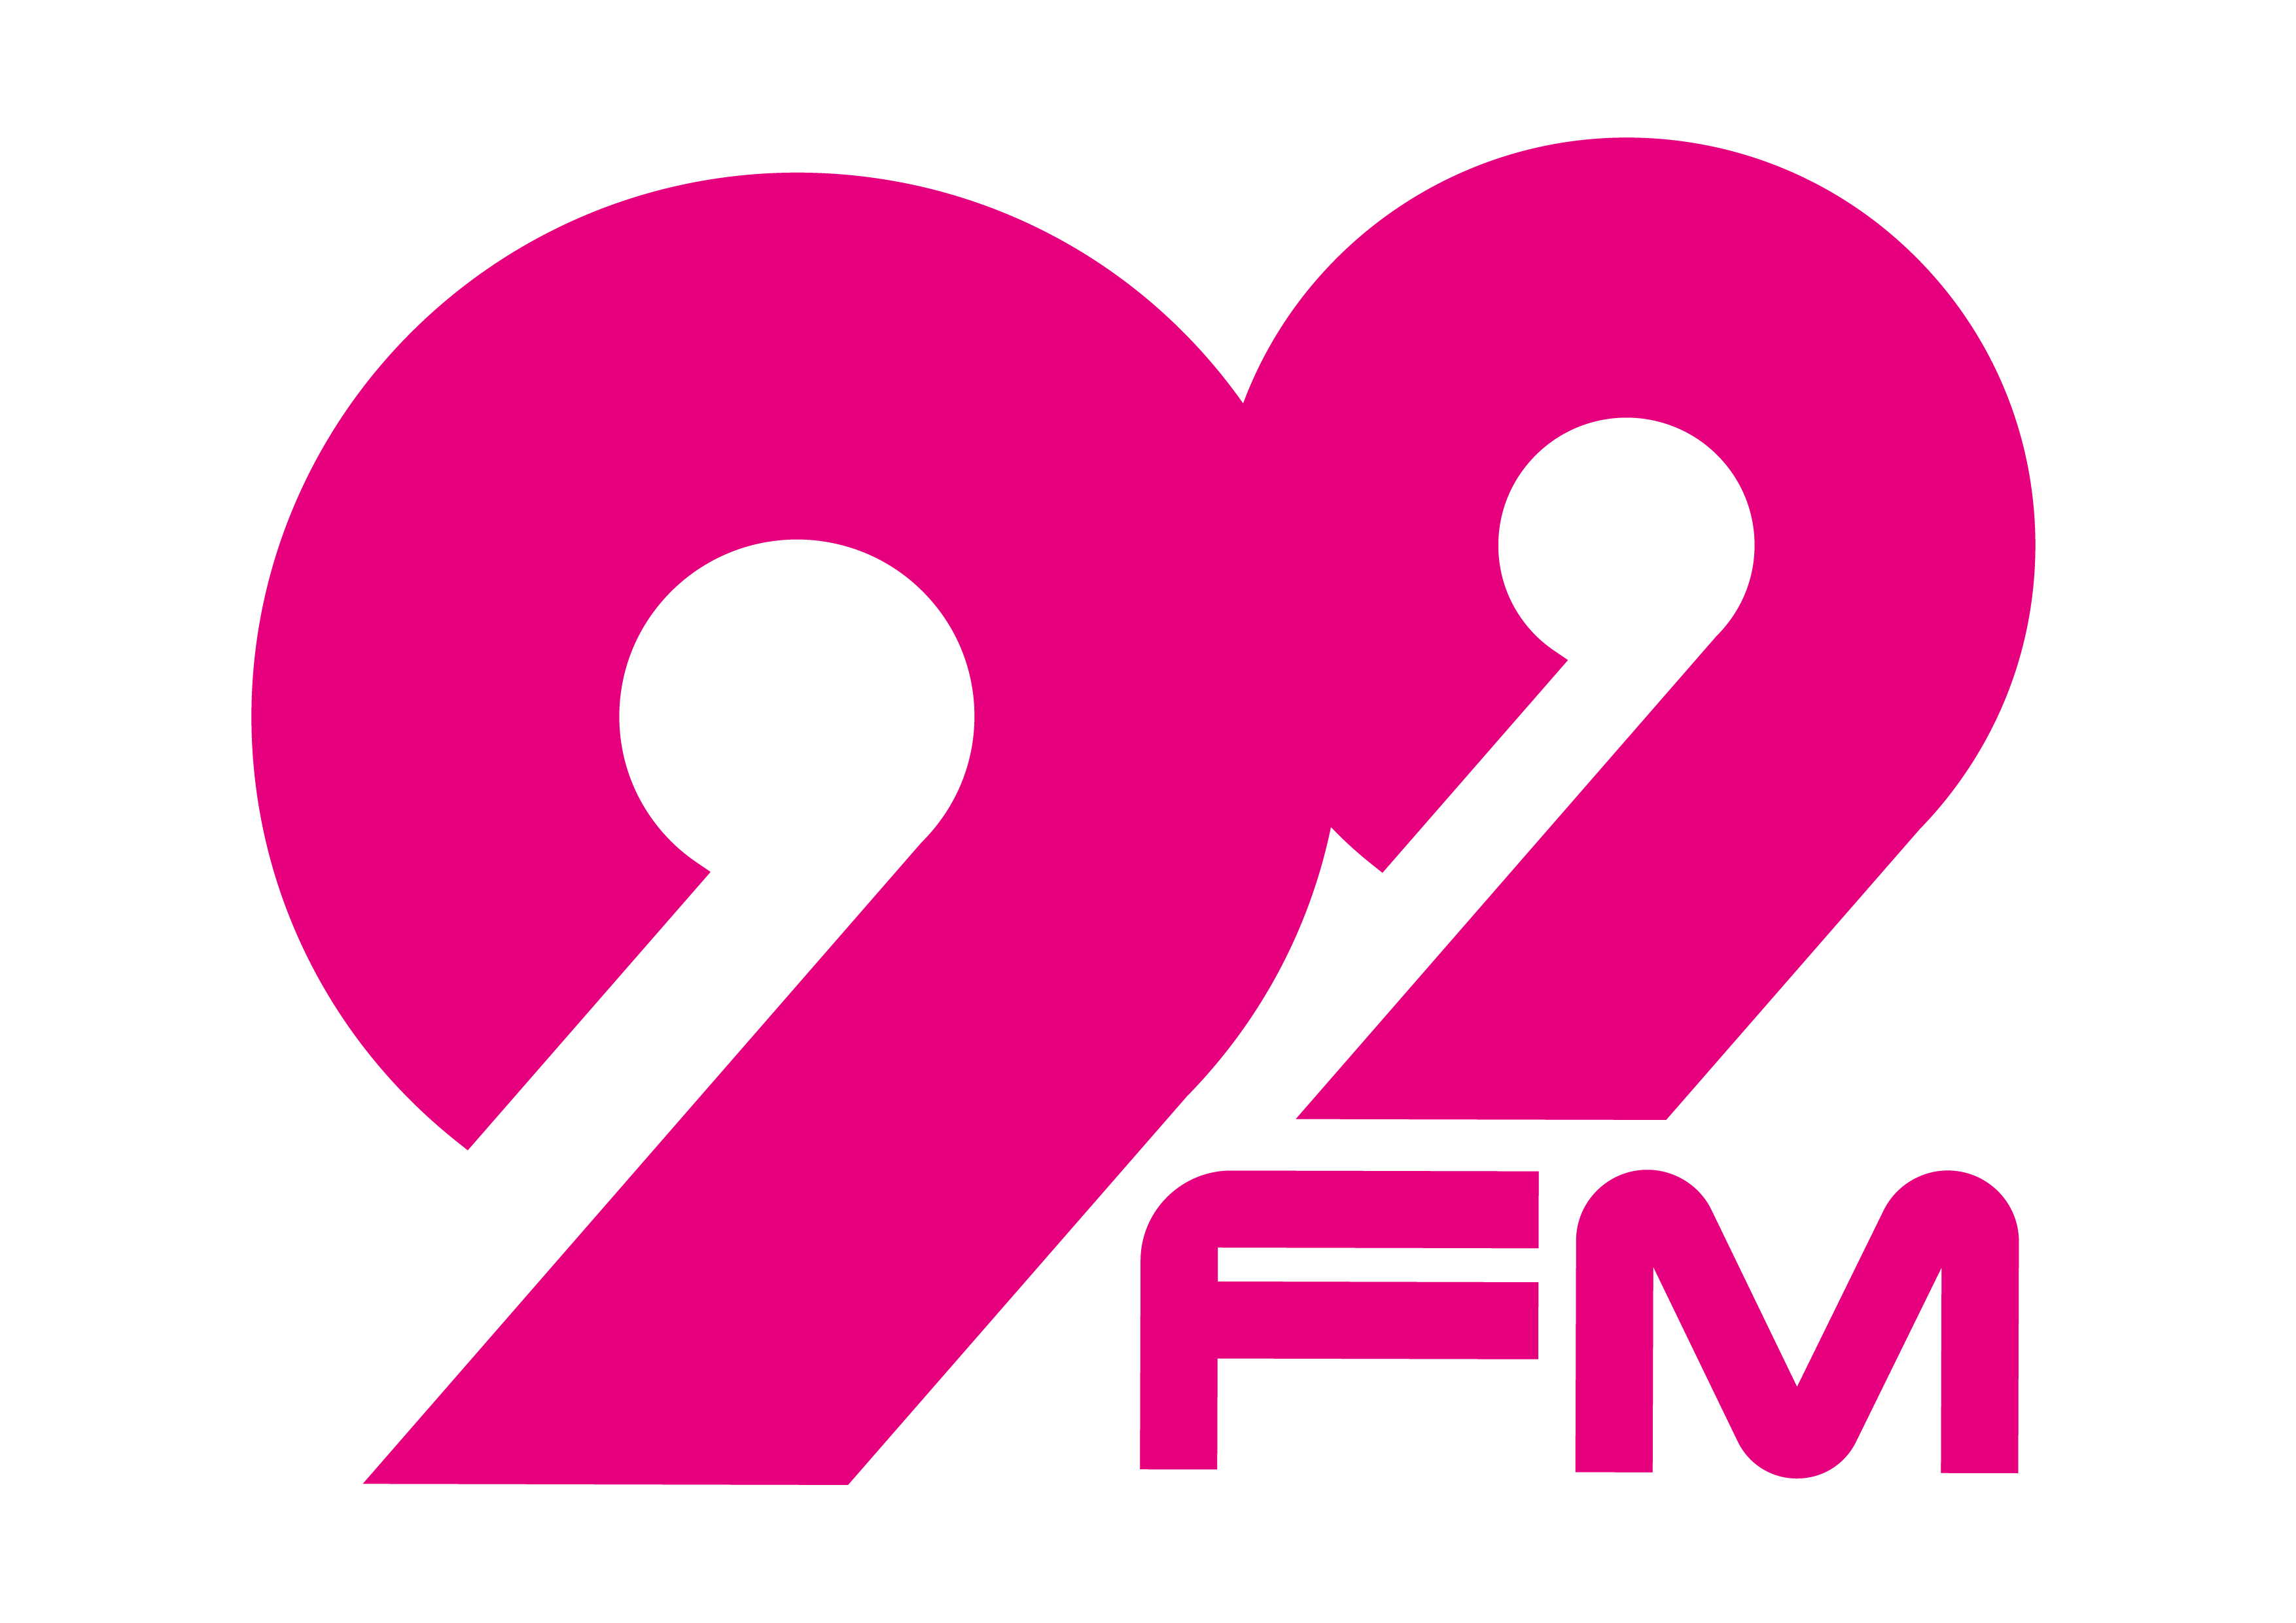 99FM NEW logo - Colour-02